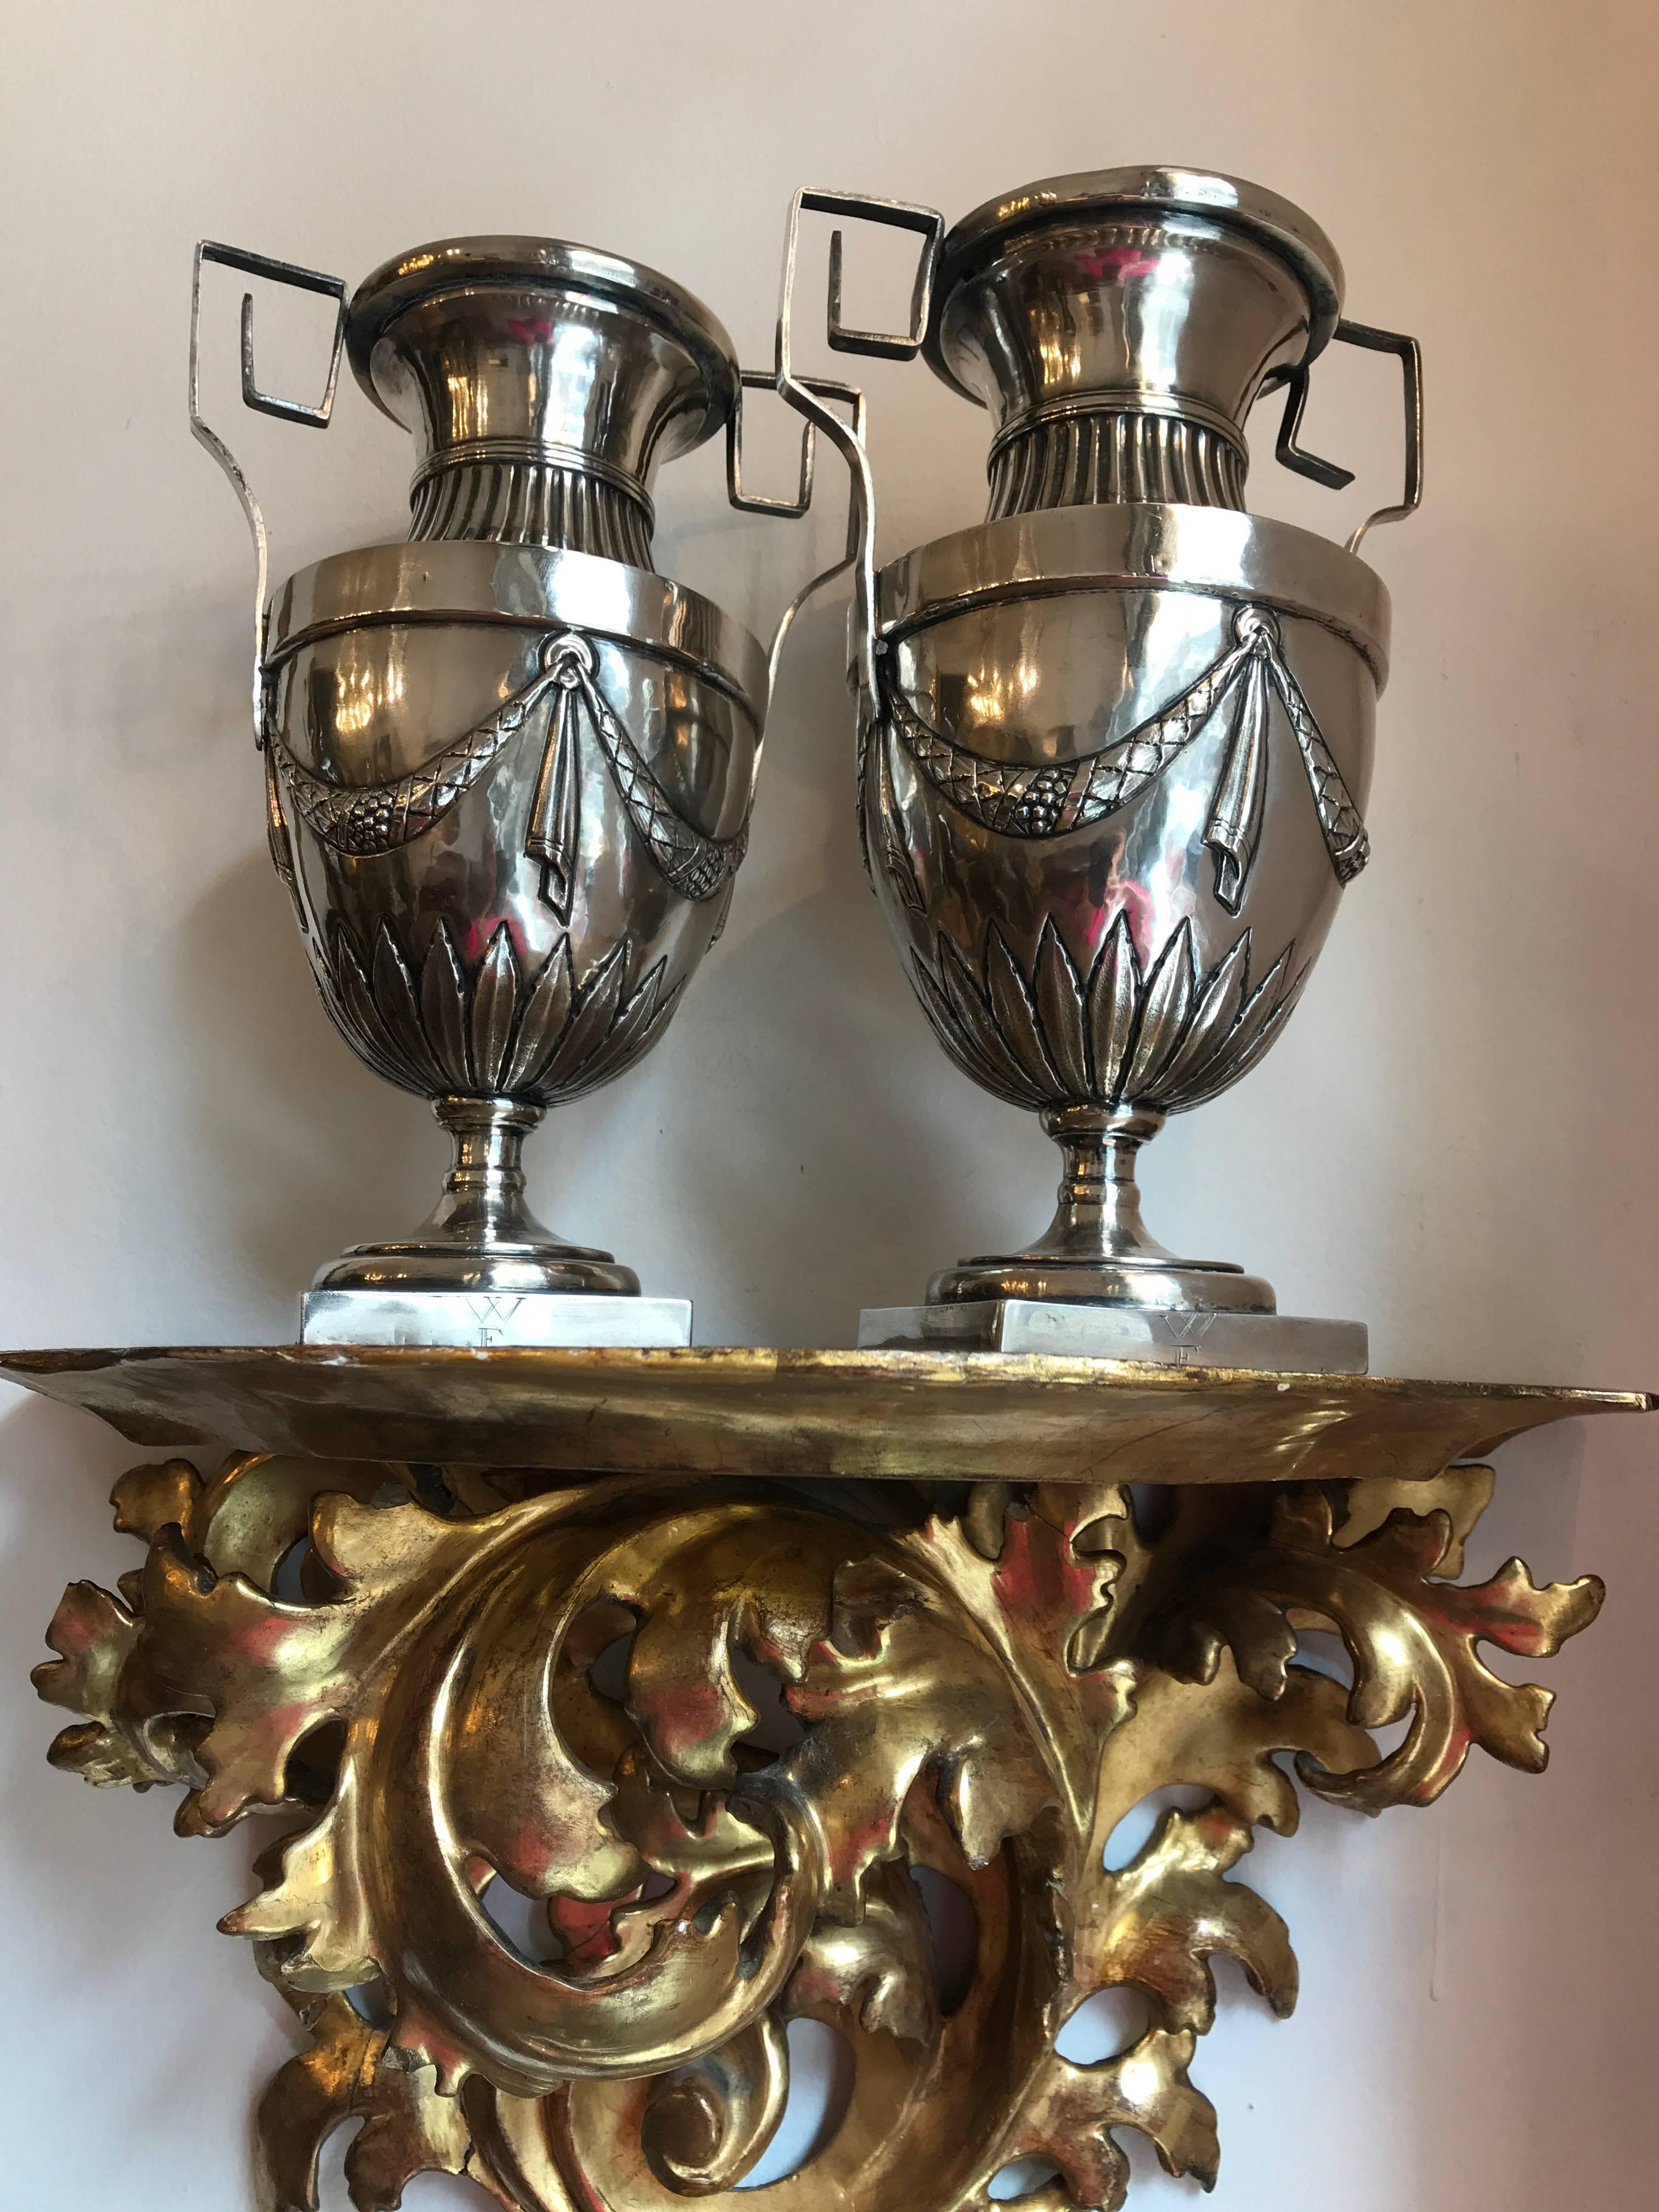 Pair of Grand Tour Italian Silver Vases from Ancona by Paolo Ruzzoli 1817 circa 8